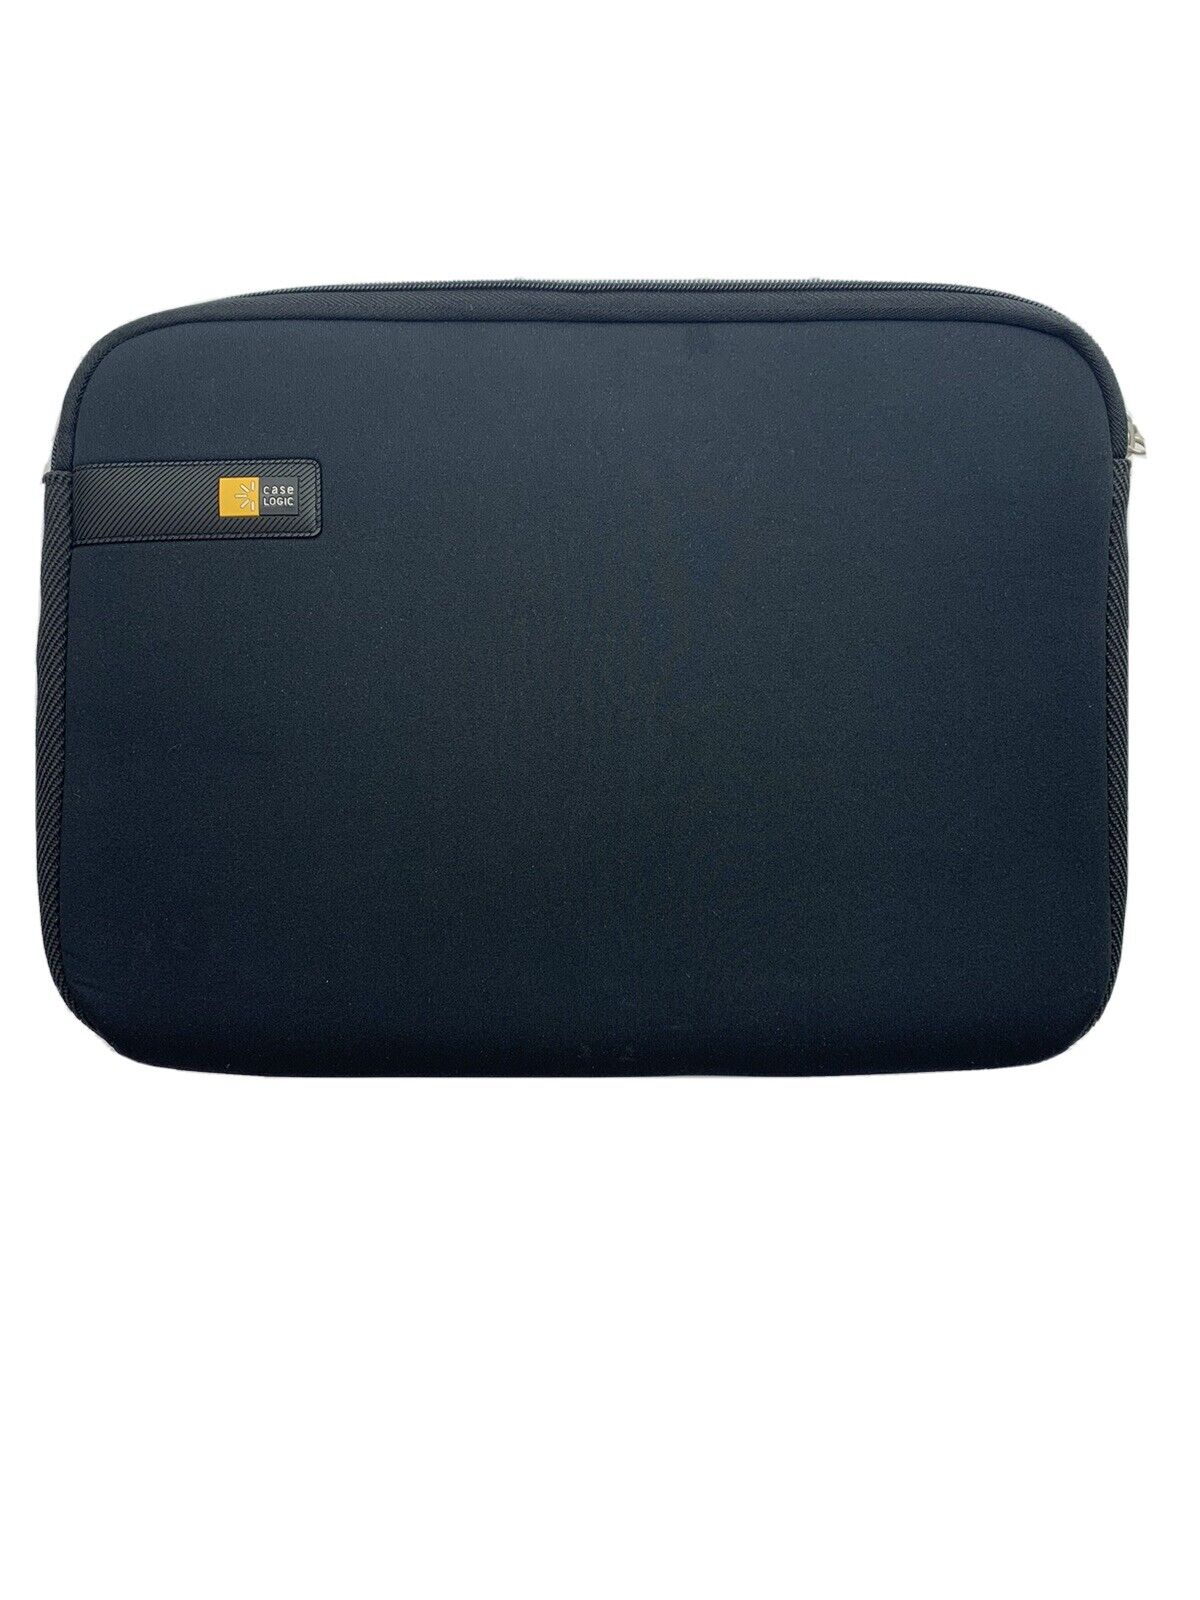 Black Case Logic 12-13" Laptop MacBook Pro Protective Sleeve